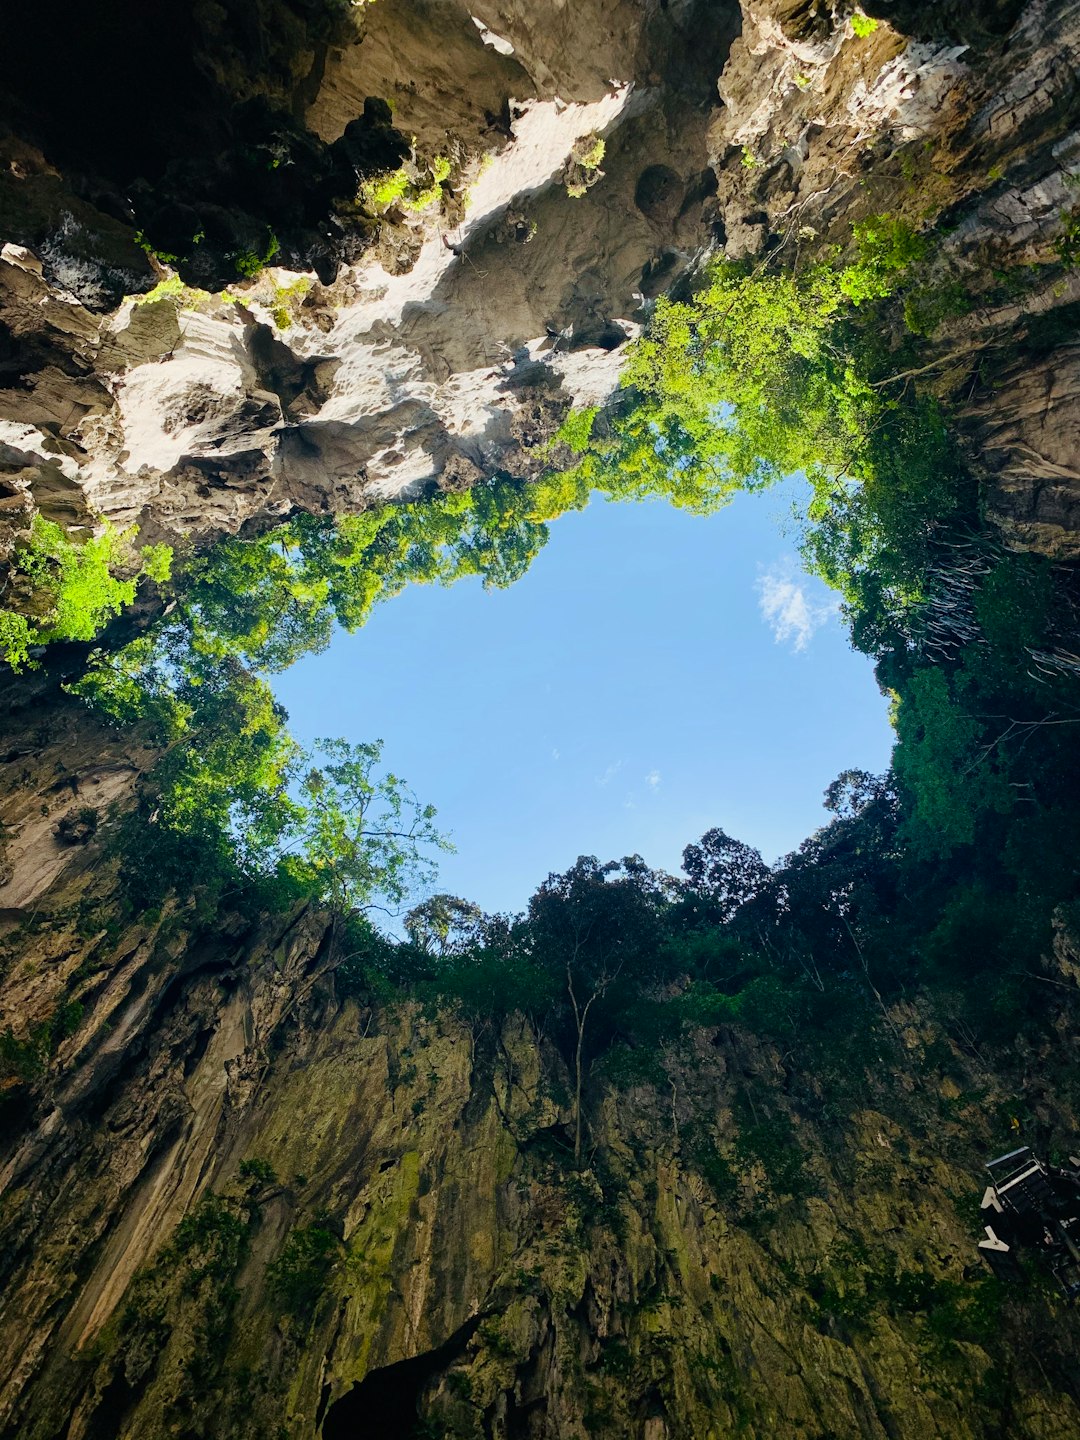 Nature reserve photo spot Batu Caves Malaysia